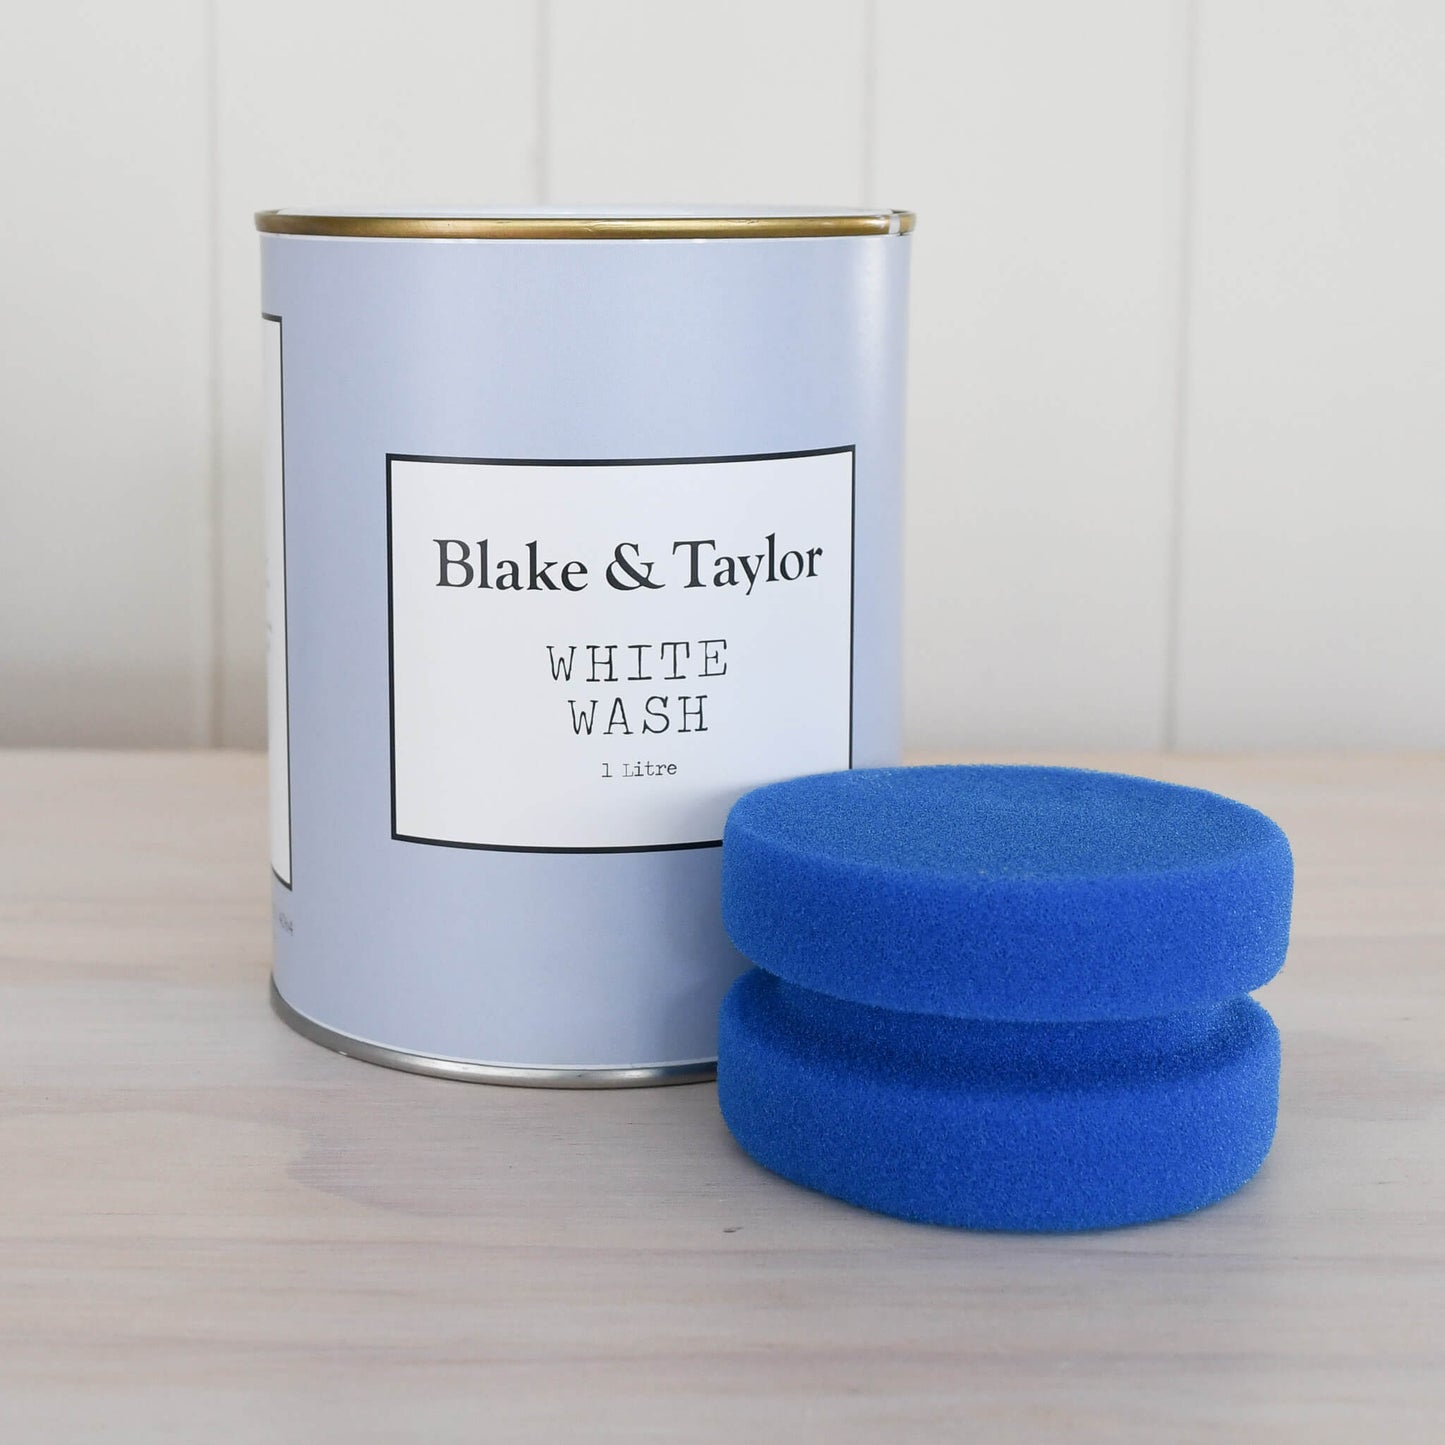 1 litre Blake & Taylor White Wash with blue sponge applicator